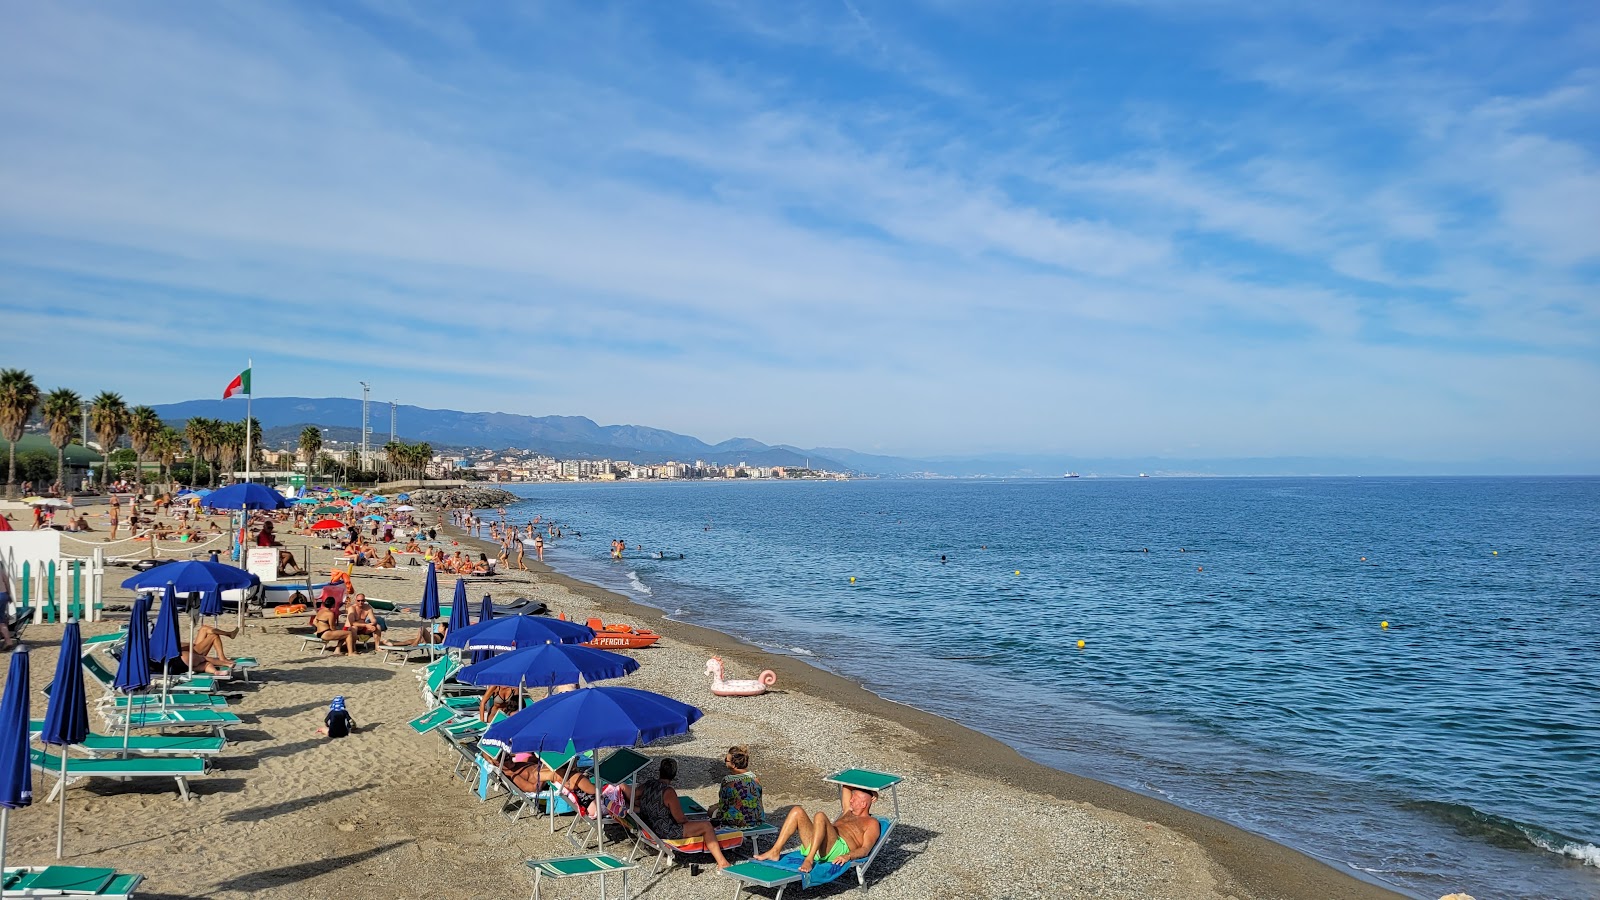 Photo of Spiaggia di Zinola with bright sand surface